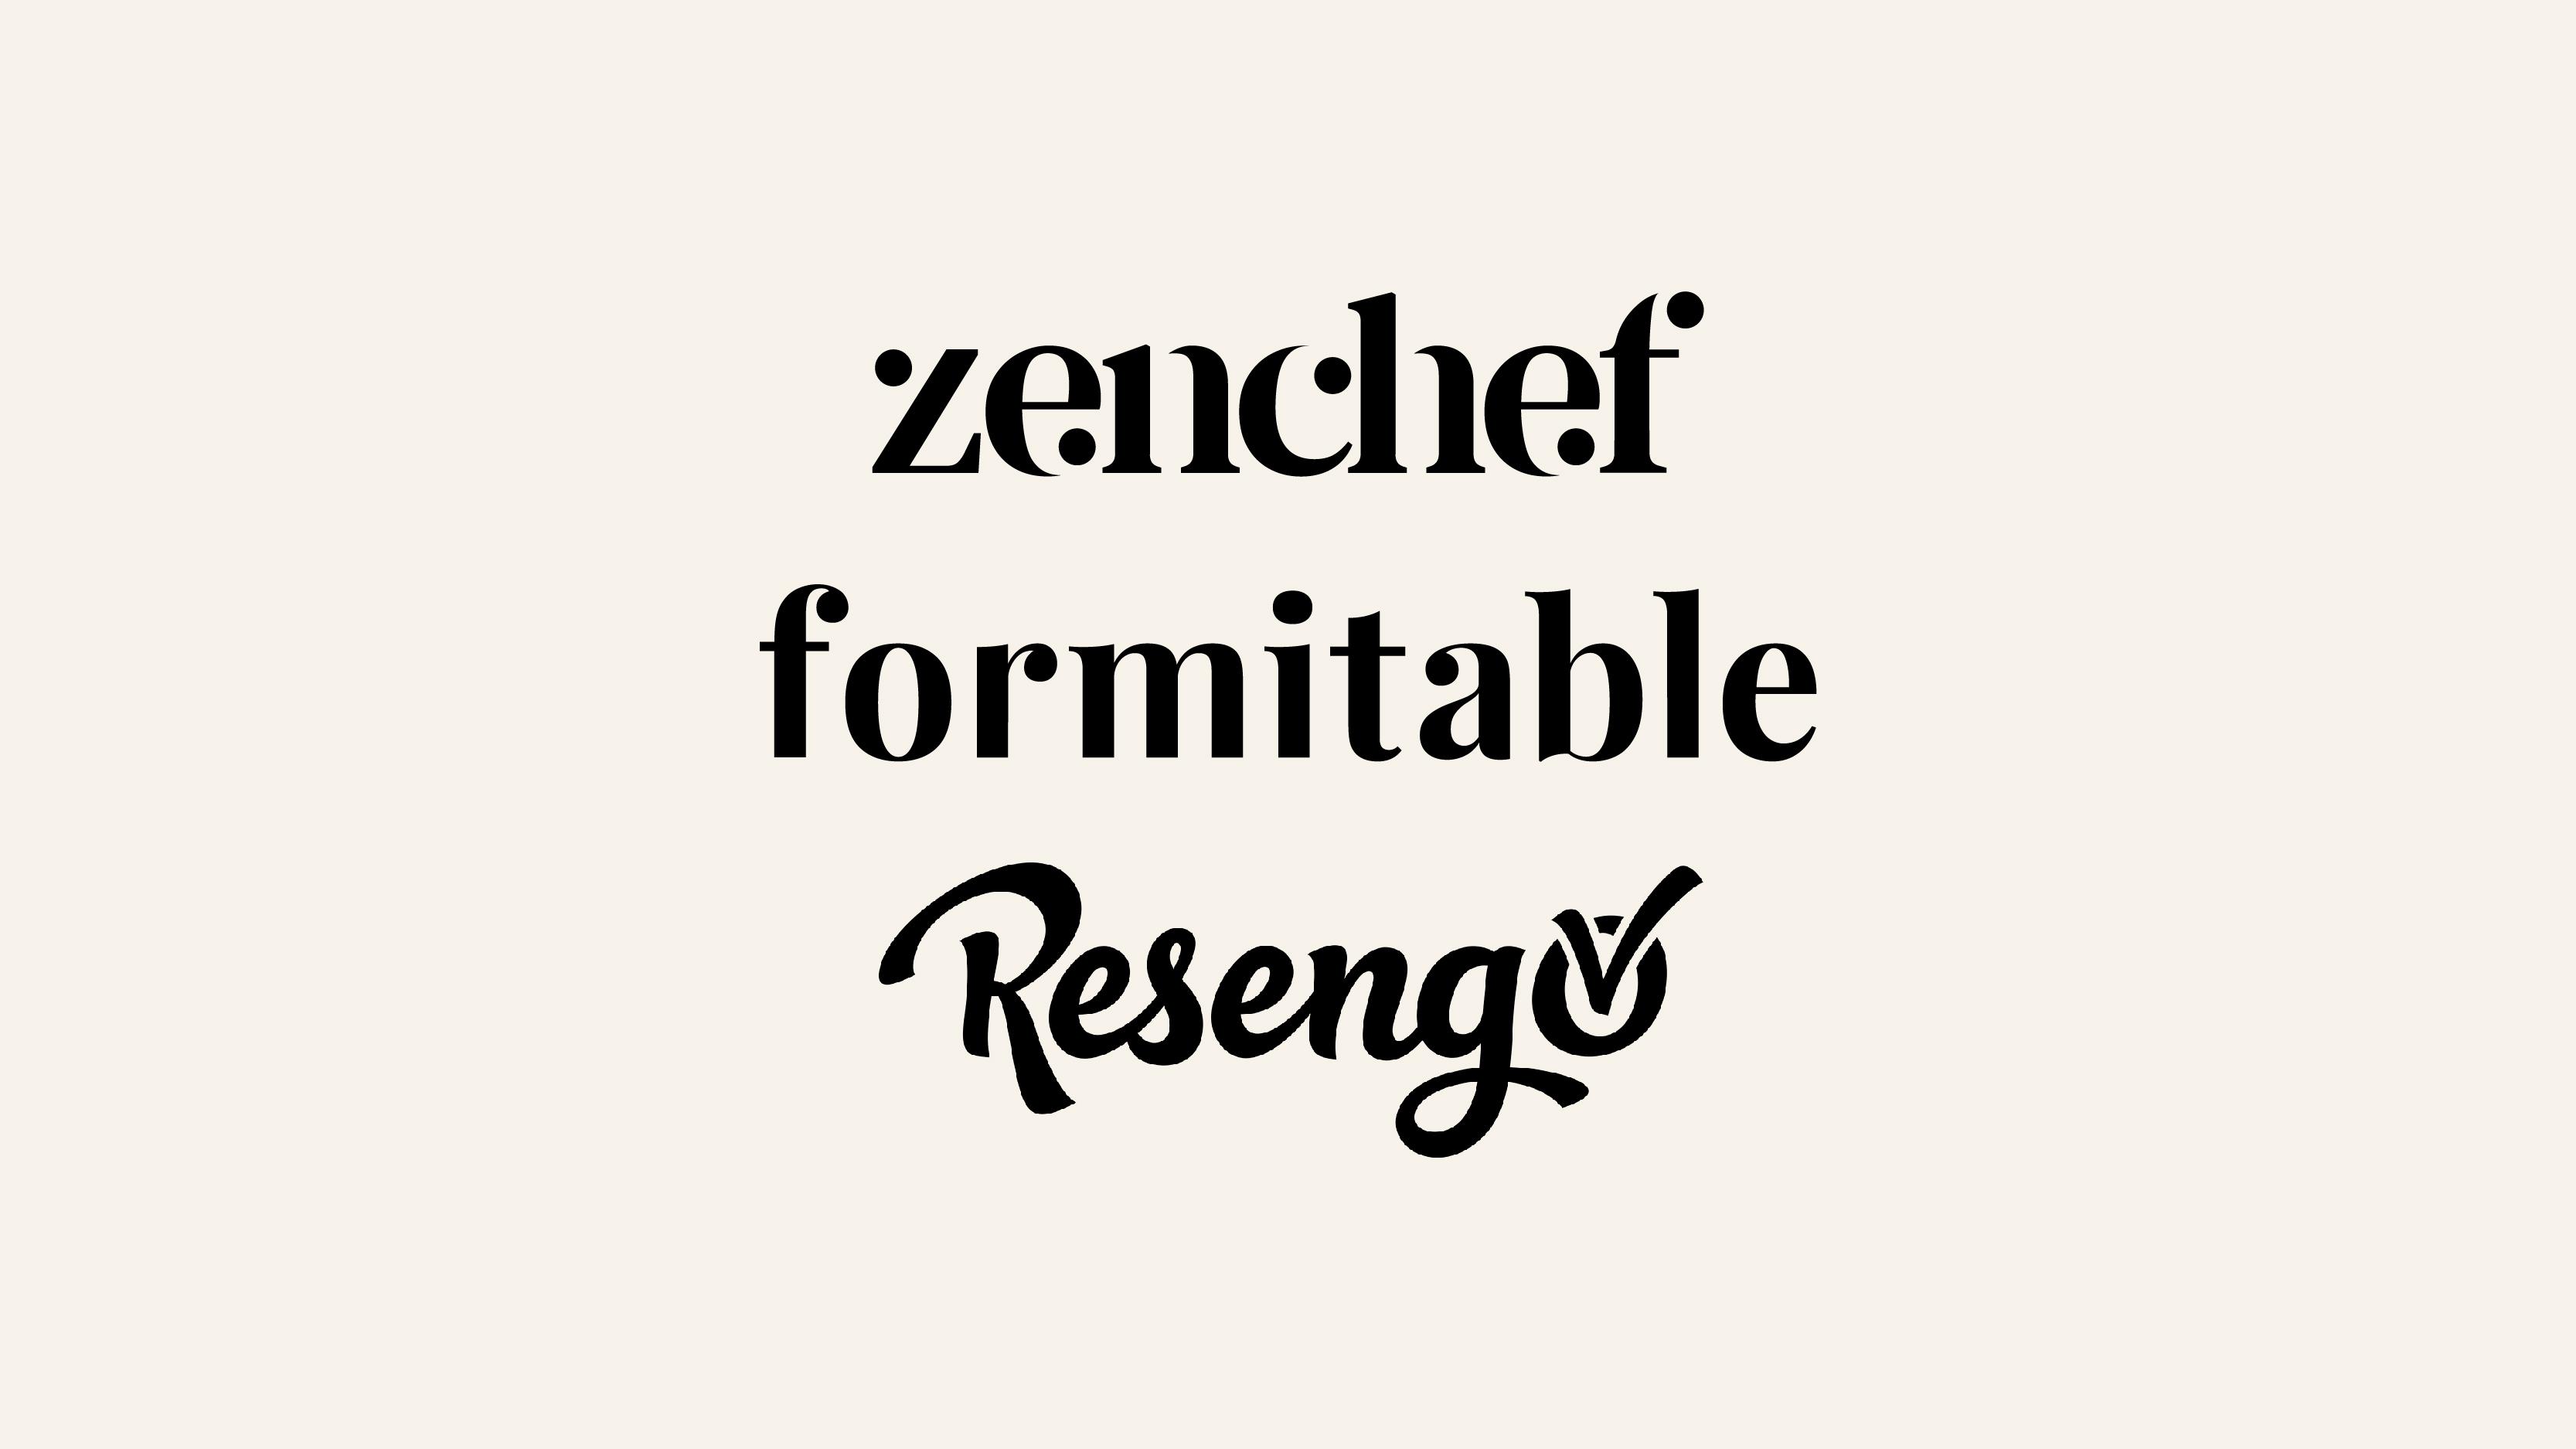 The Zenchef | Formitable group acquires online reservation platform Resengo.